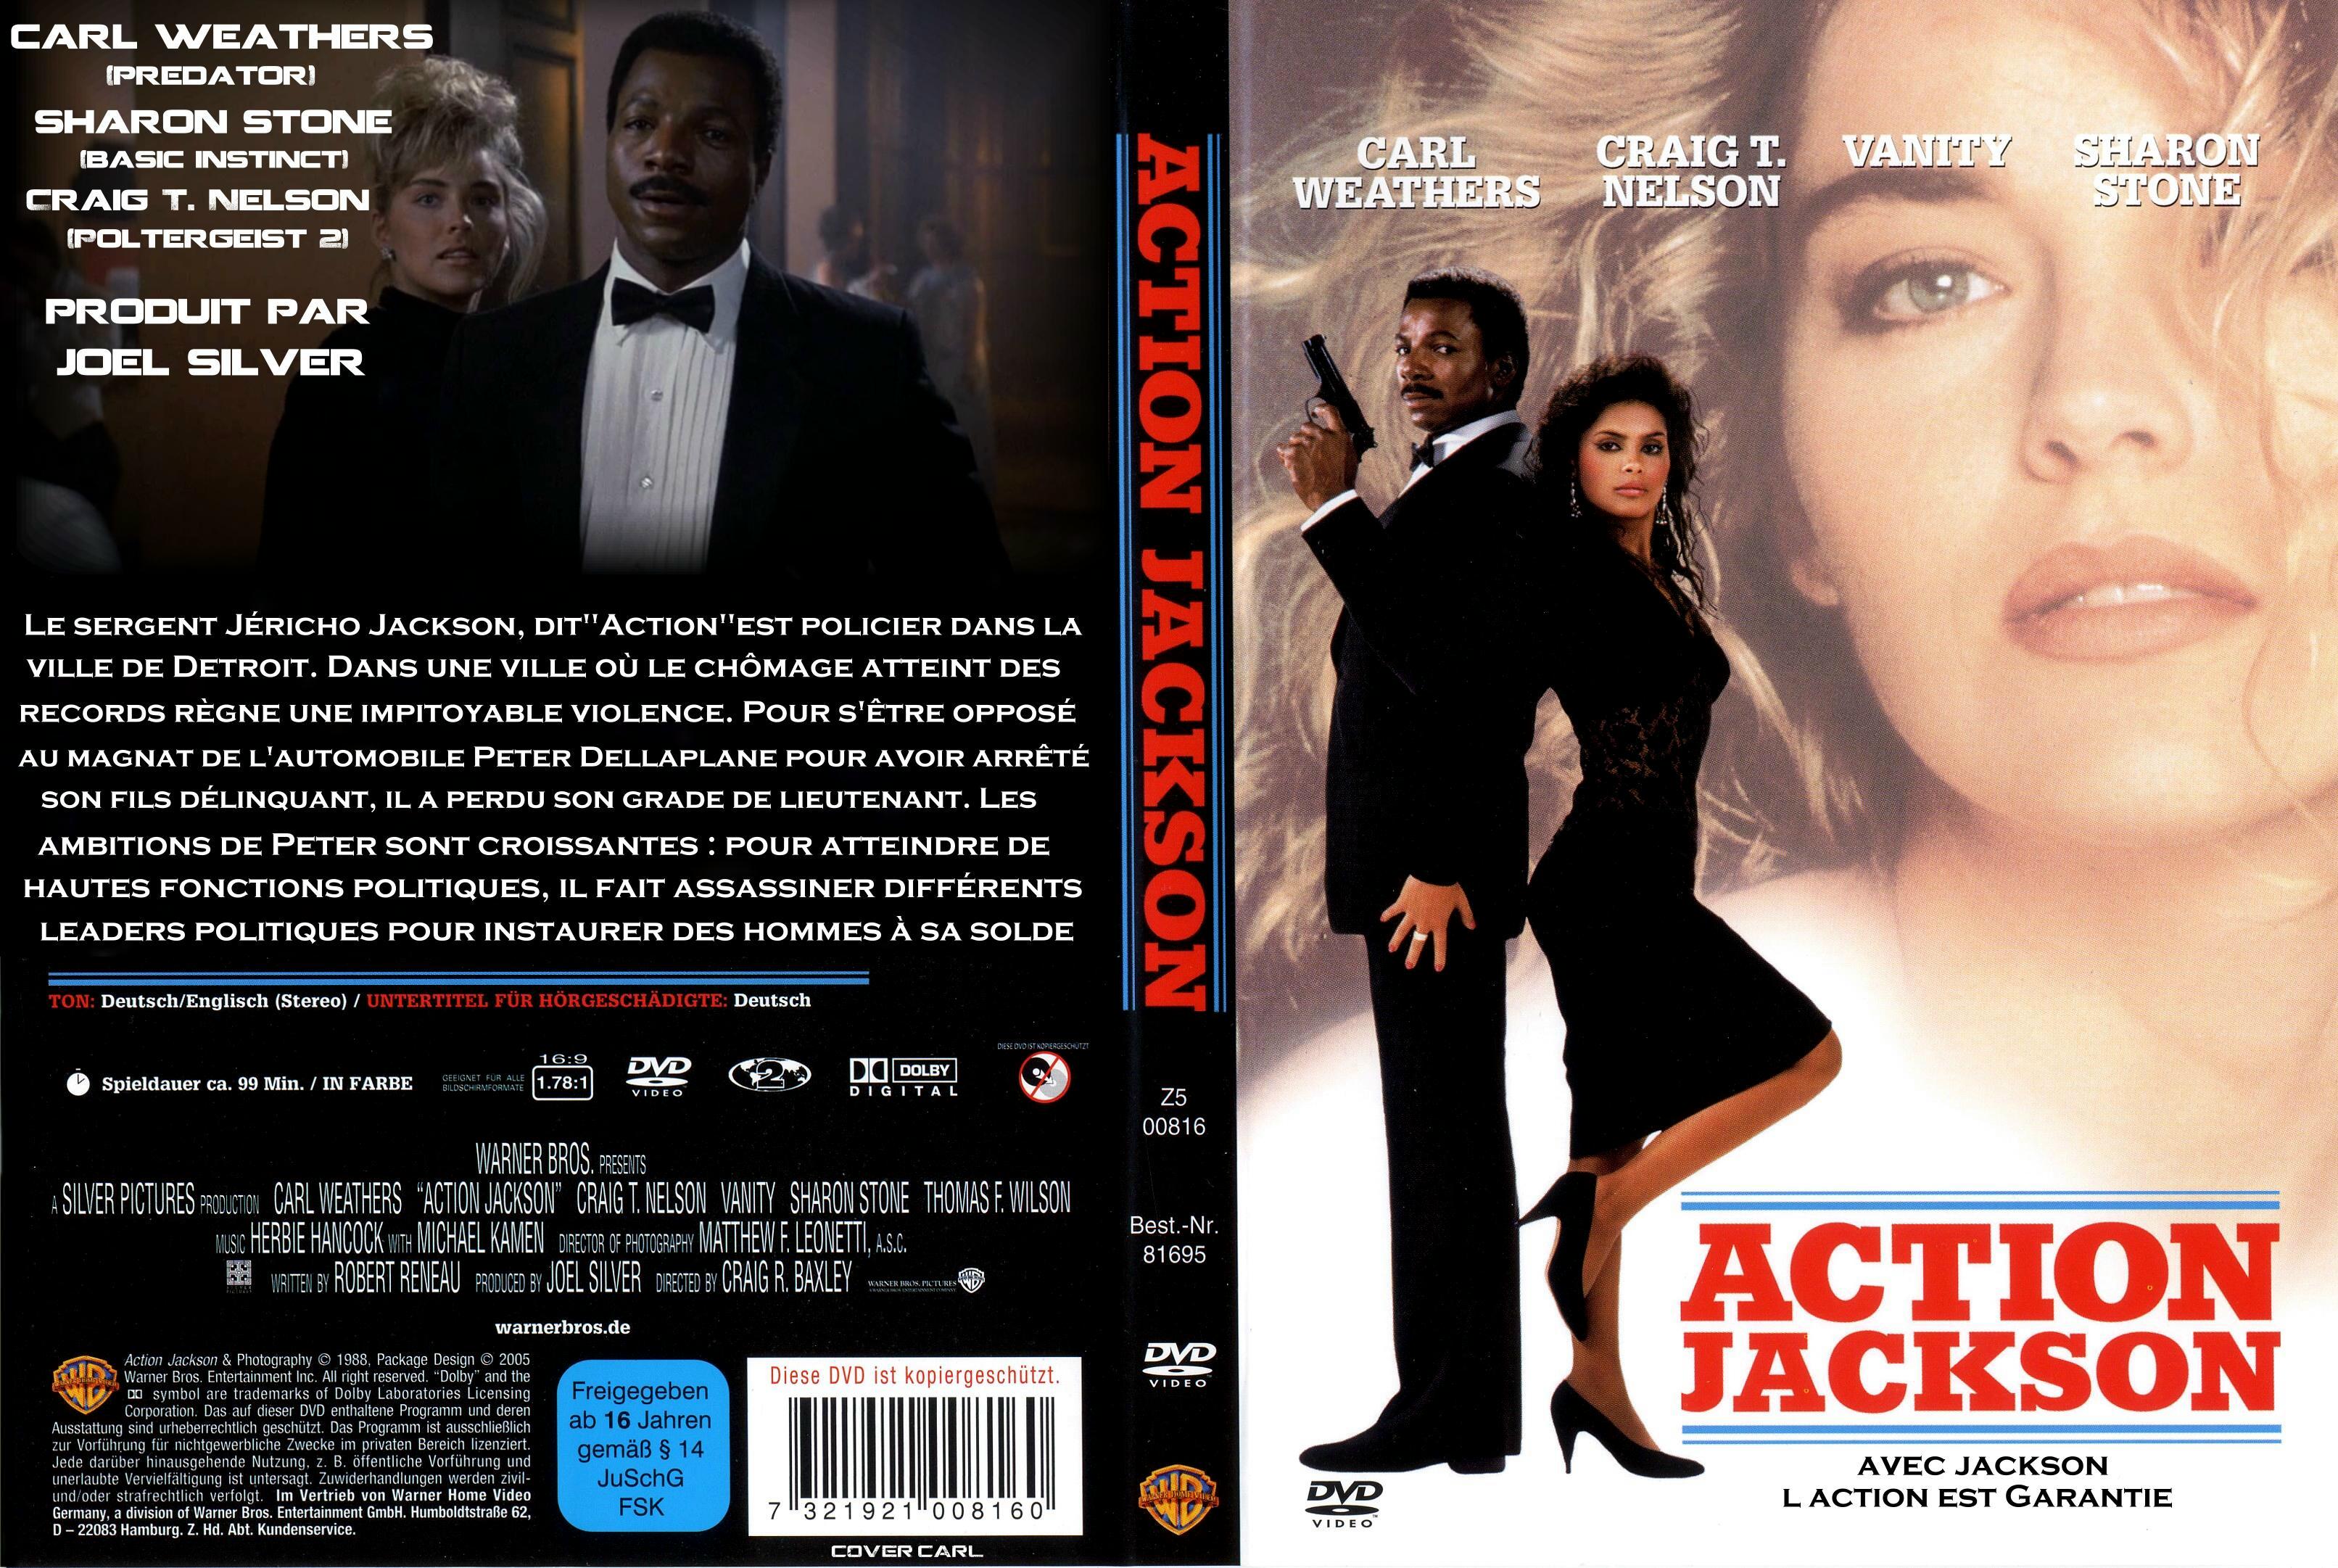 Jaquette DVD Action Jackson custom